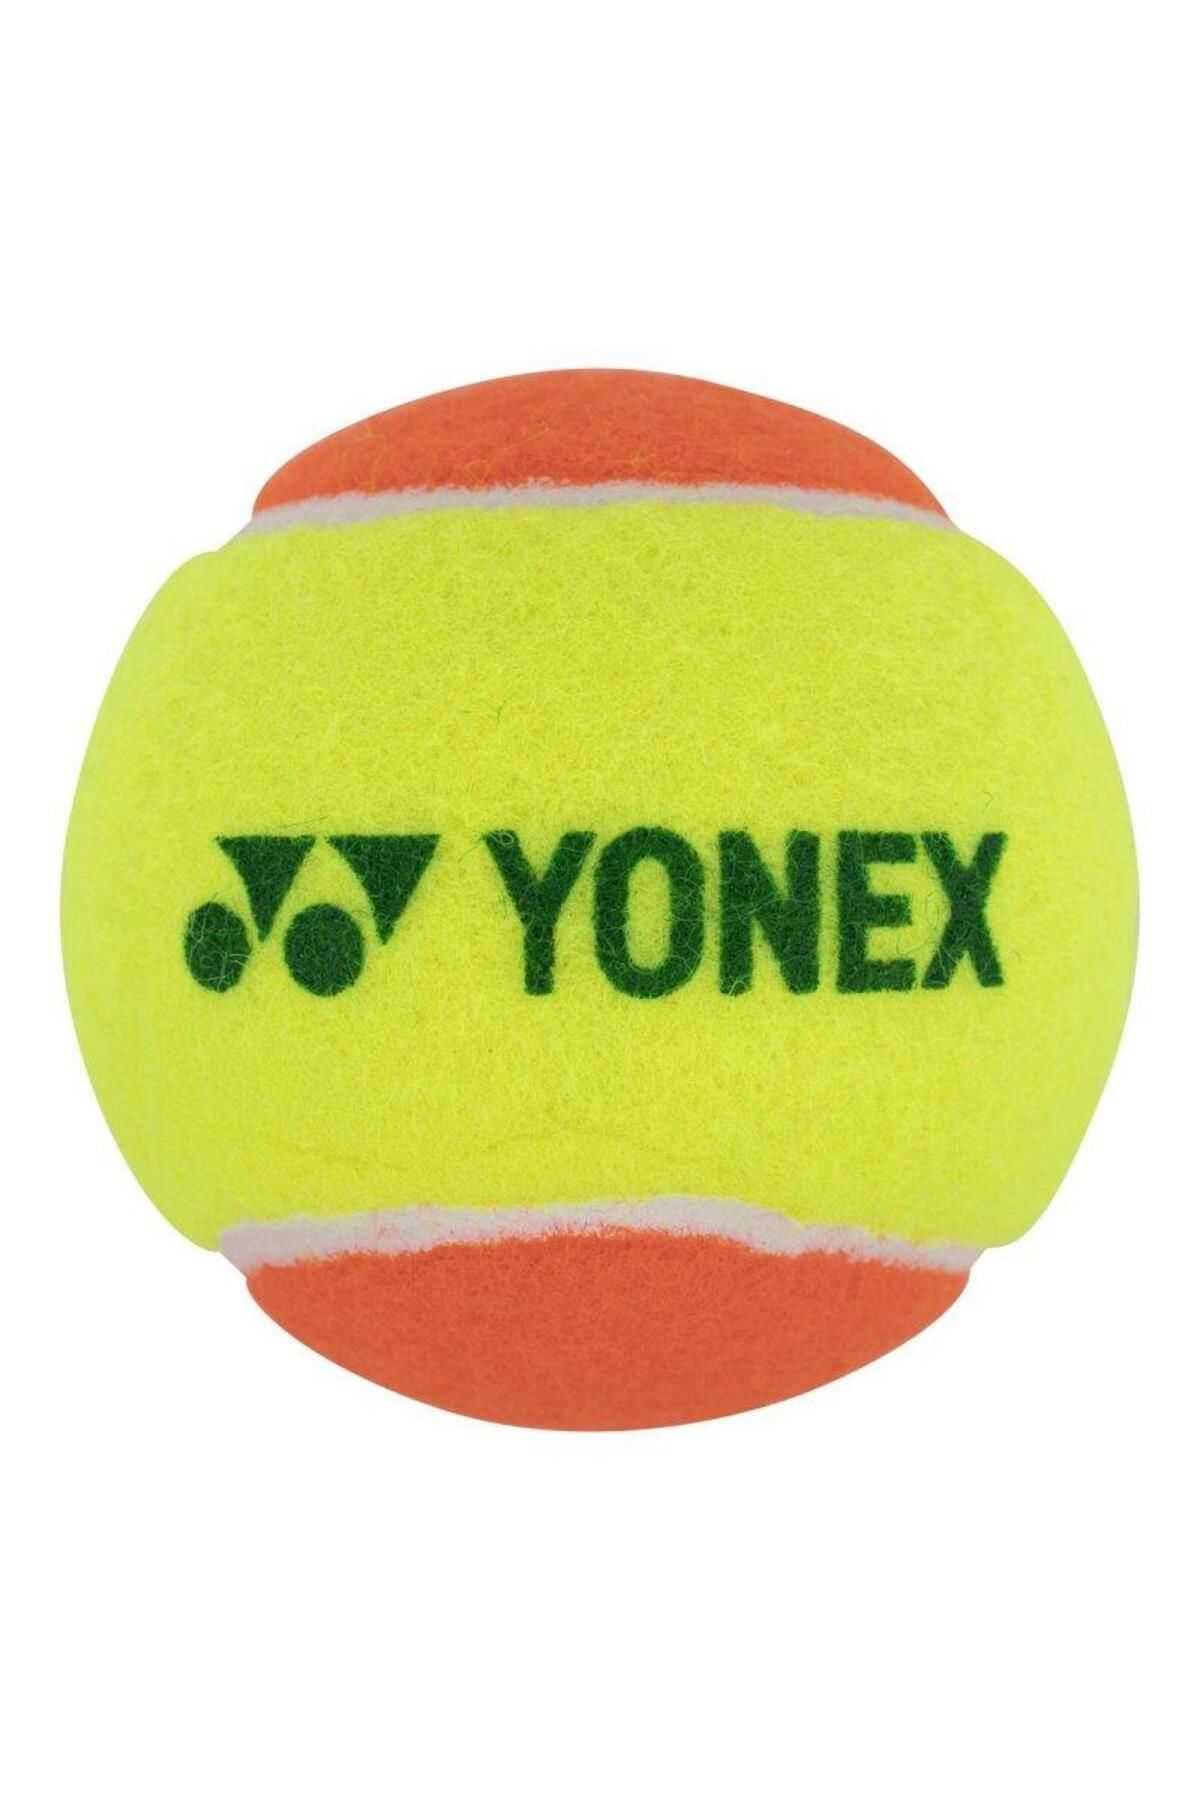 Yonex YY22 Muscle Power 30 Turuncu 60 lı Poşet Çocuk Tenis Topu